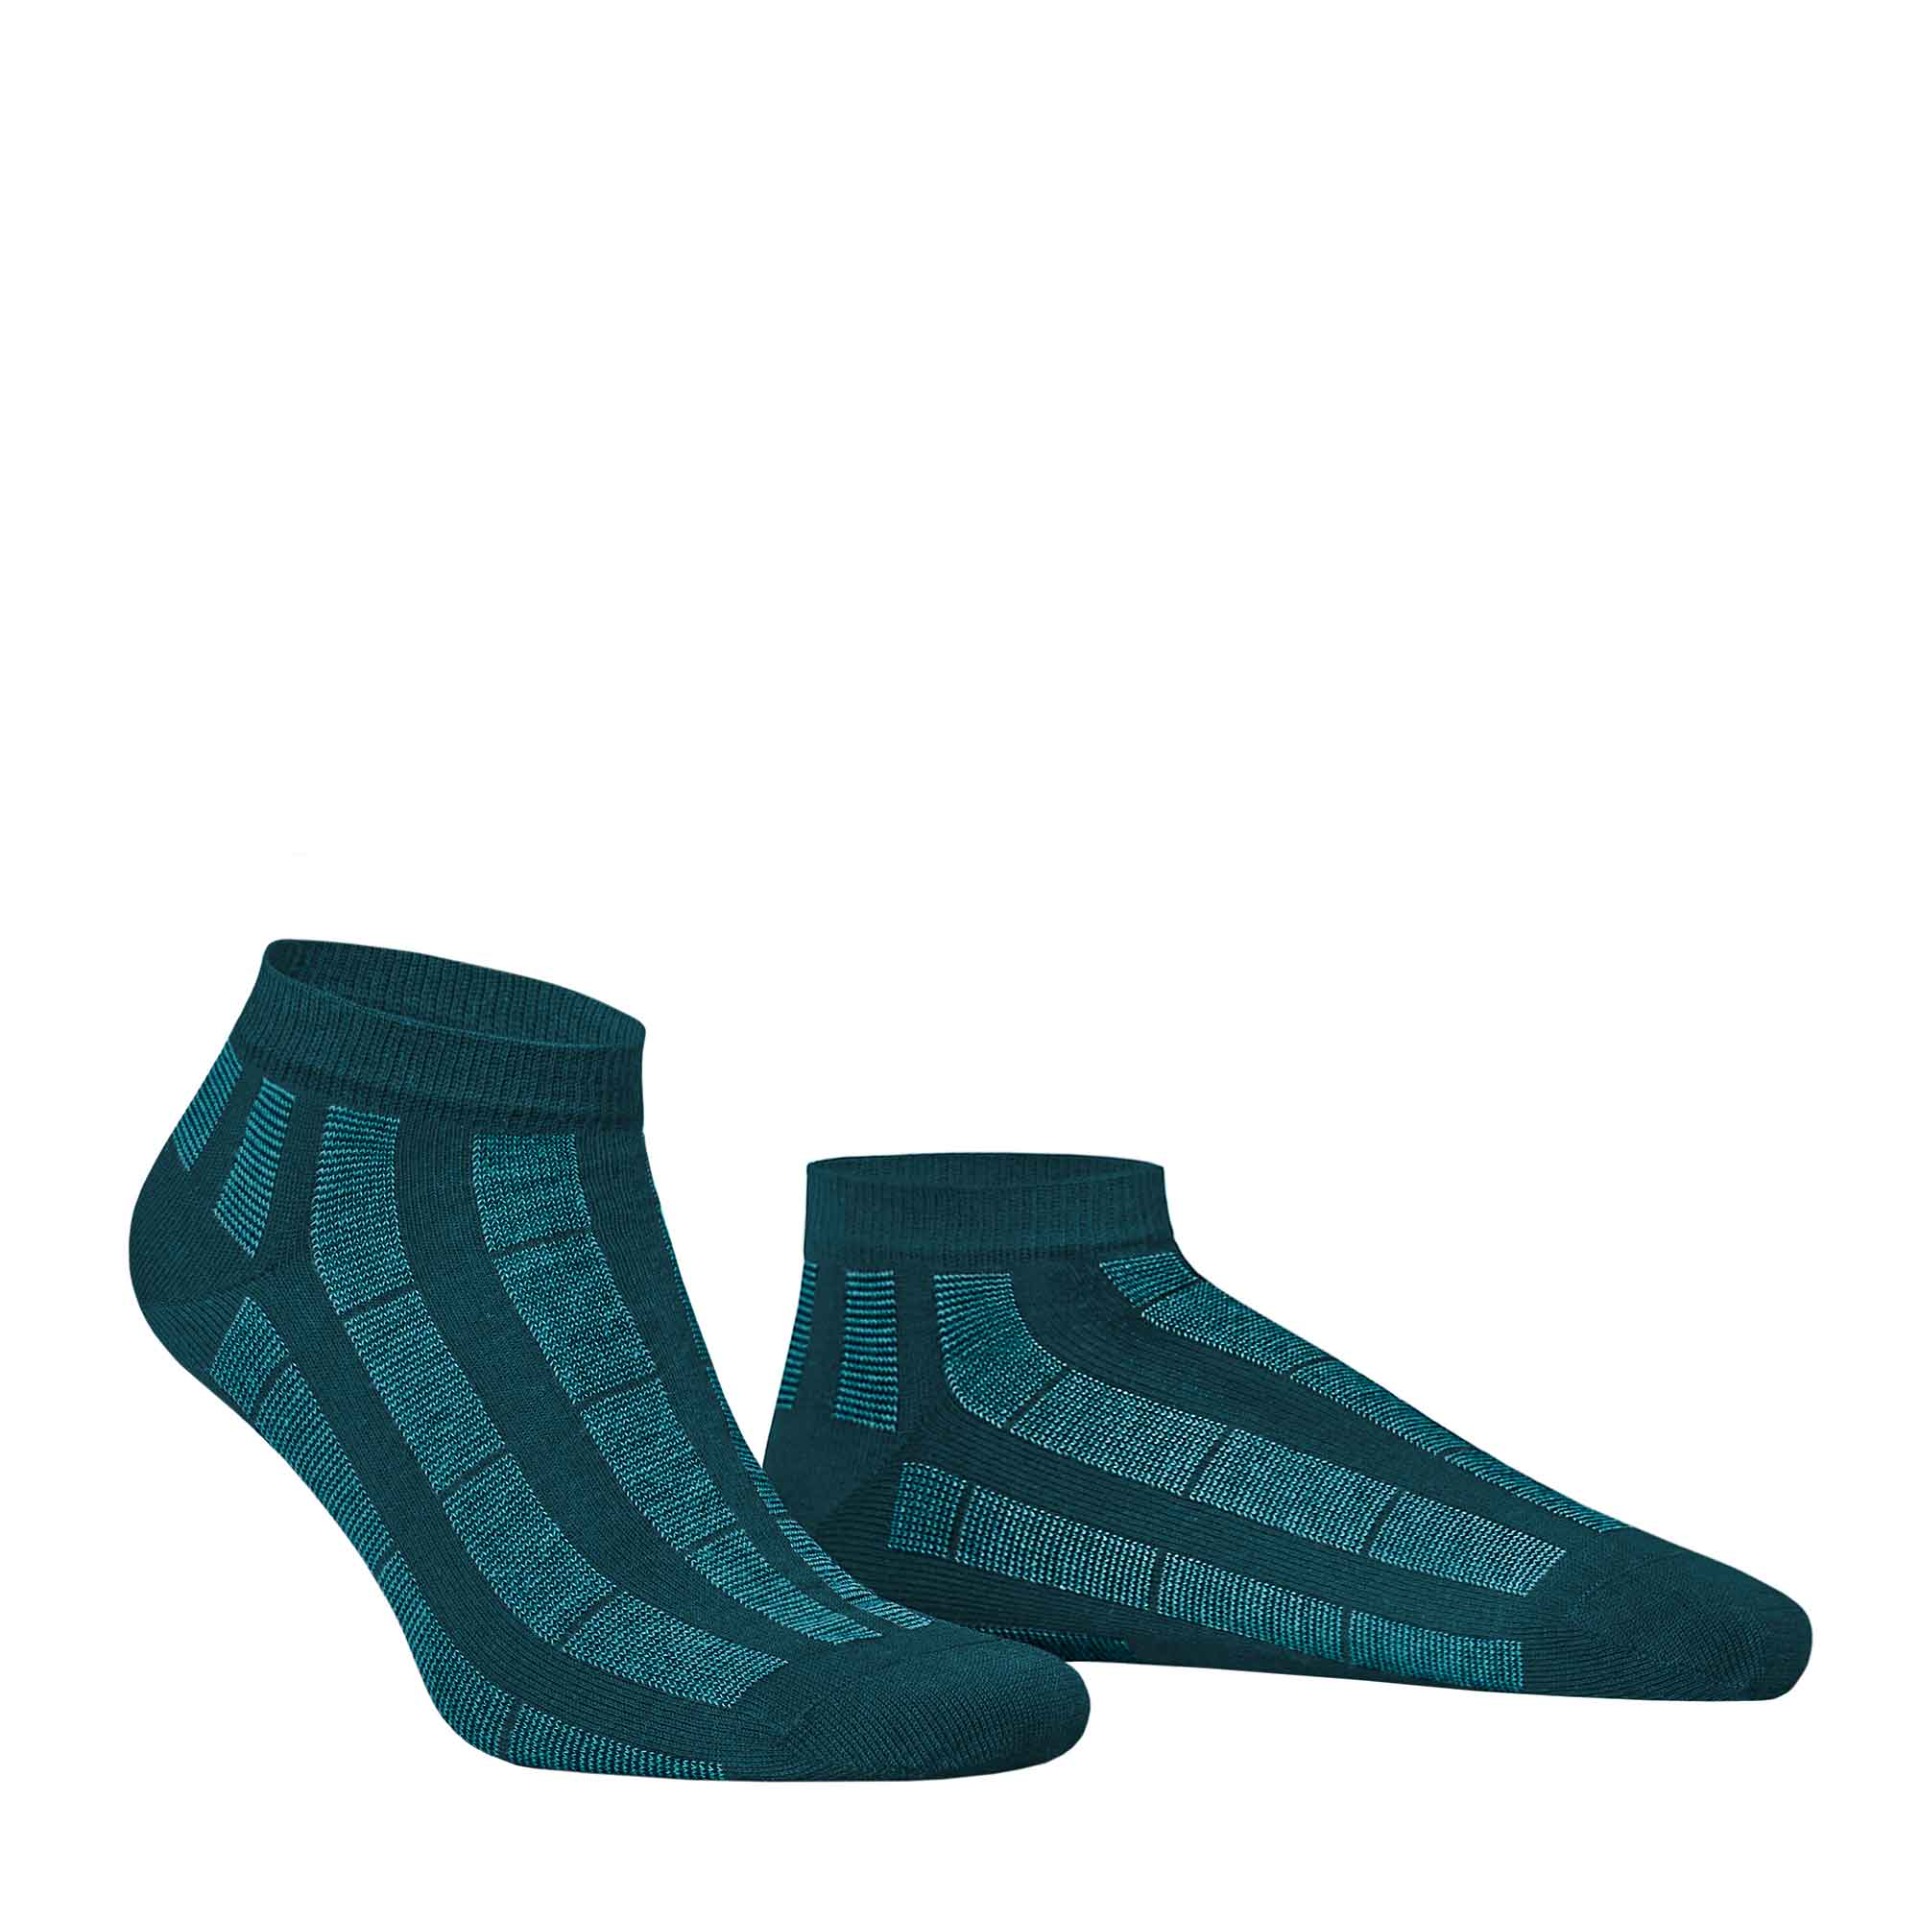 HUDSON Herren PIN -  43/46 - Sneaker Socken mit Streifen-Muster - Capri blue 0111 (Blau)